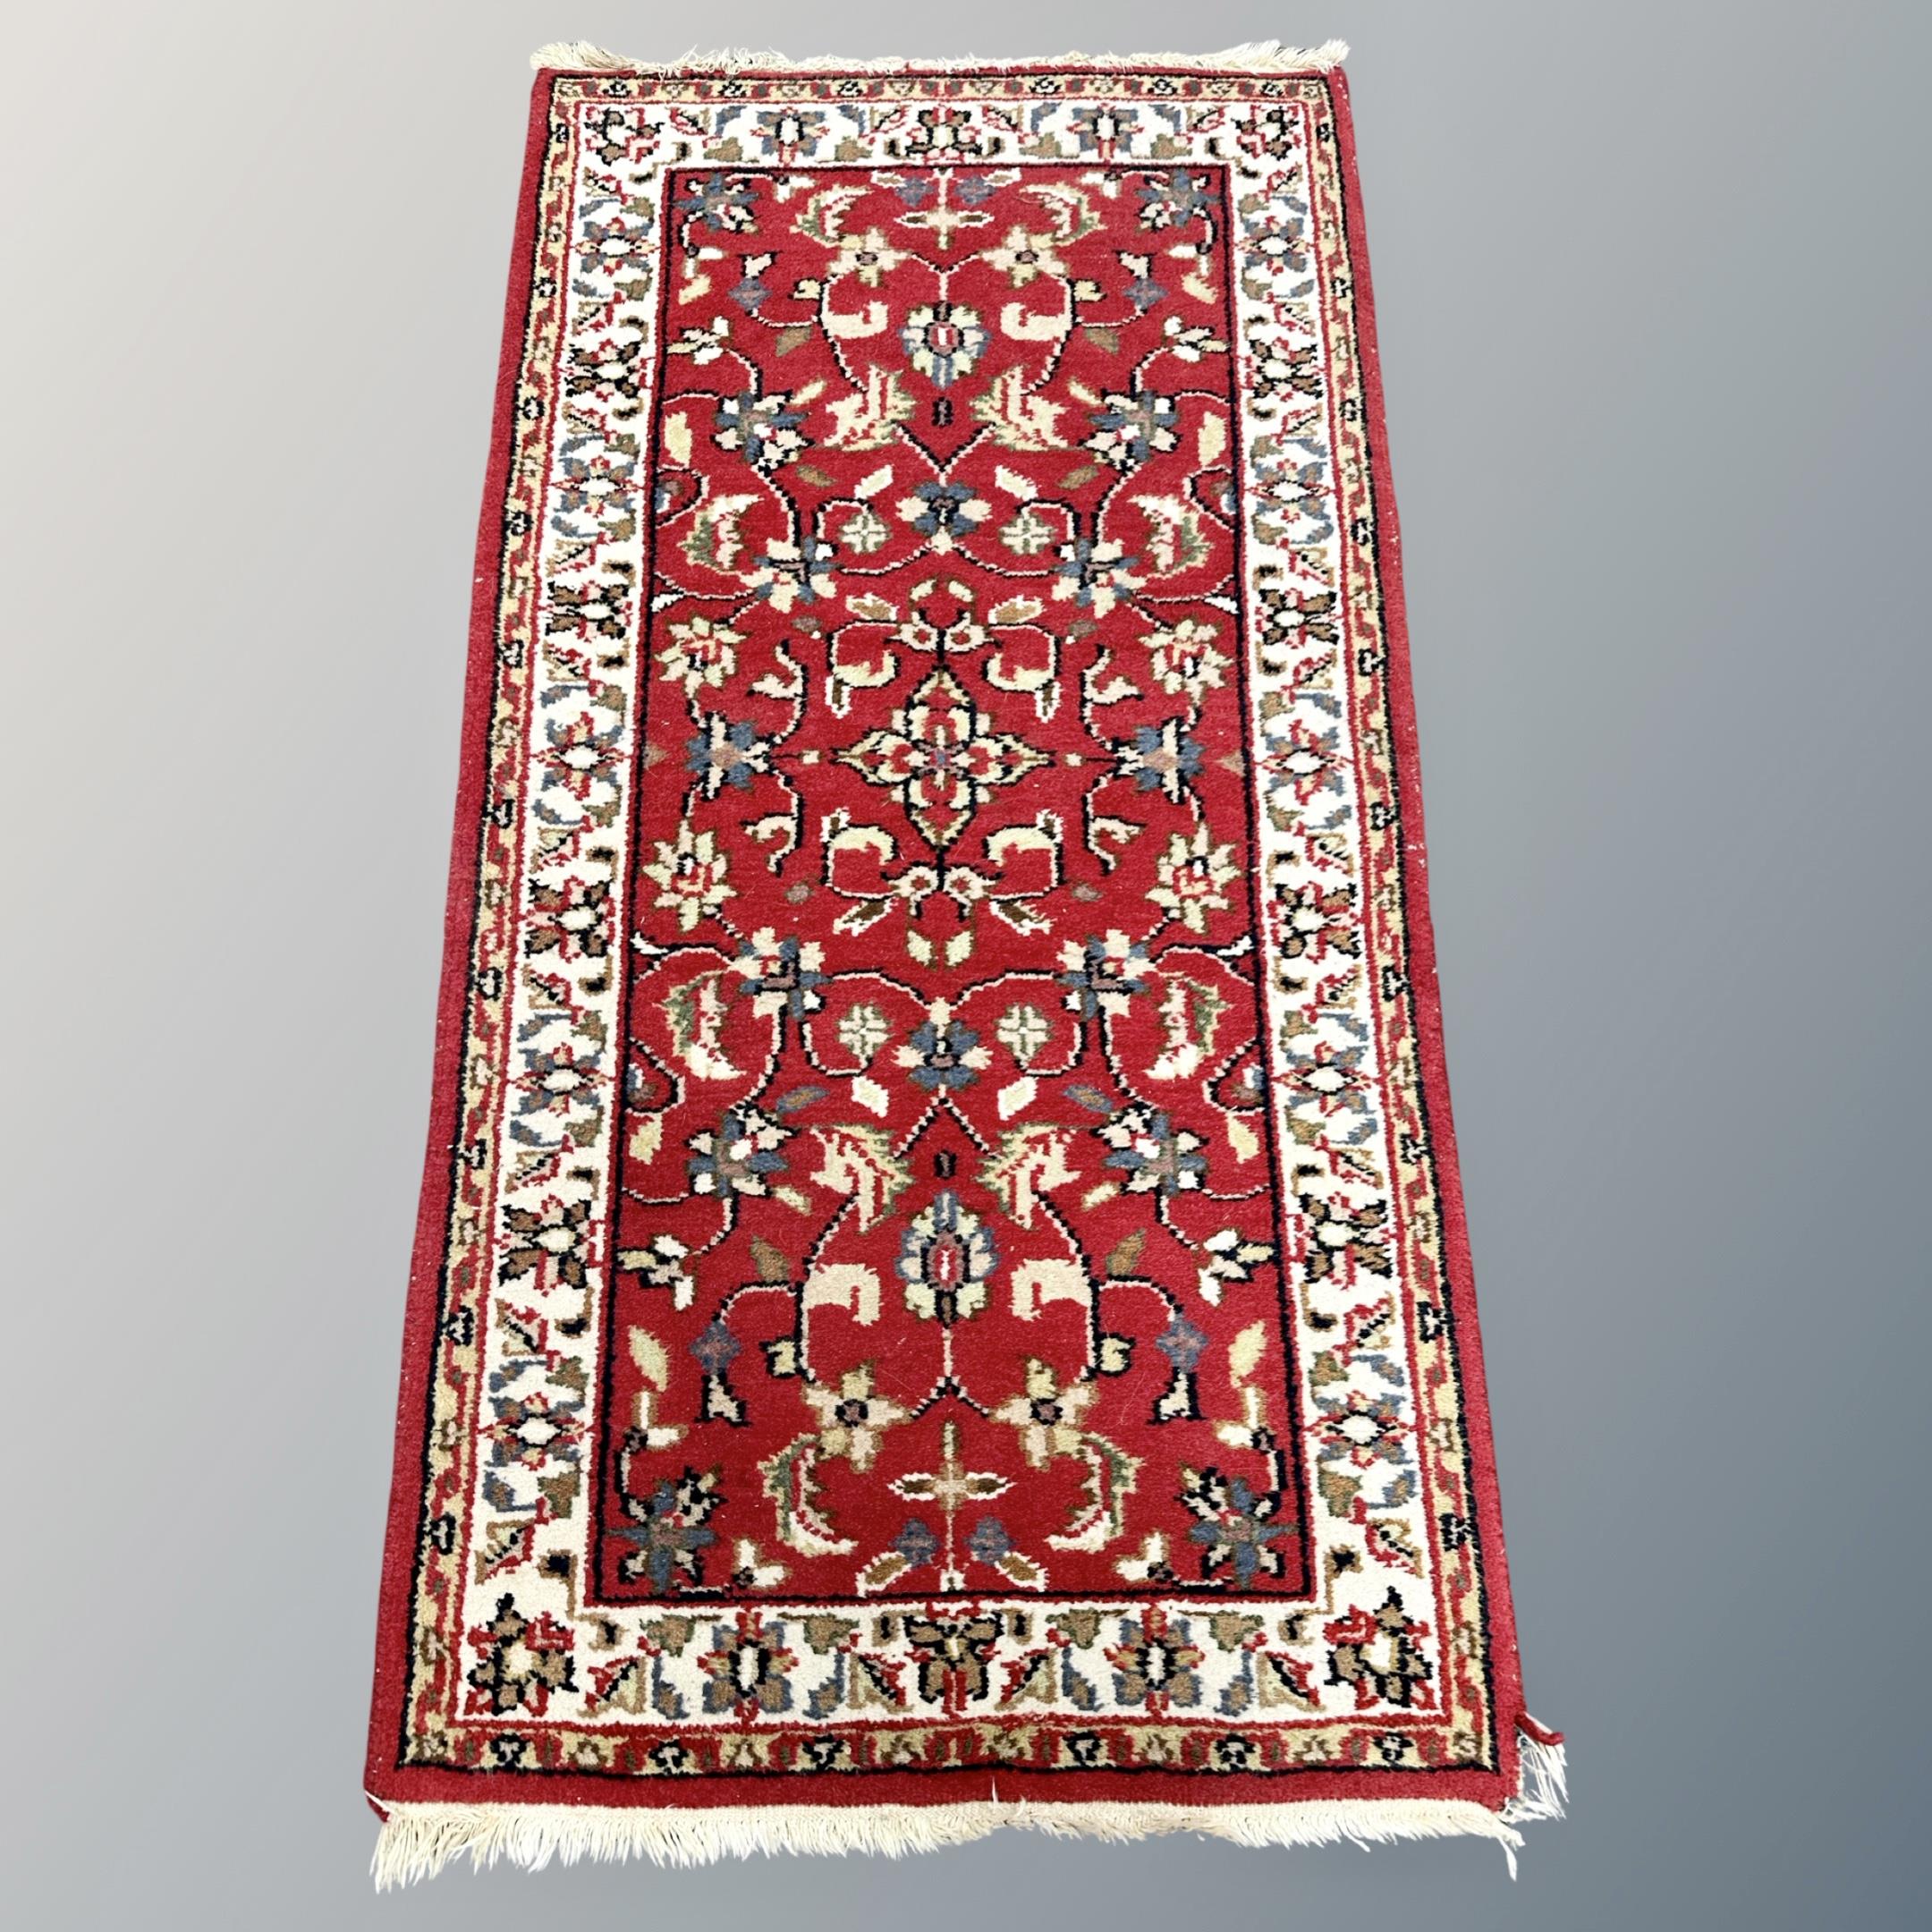 An Iranian red ground rug 143 cm x 76 cm